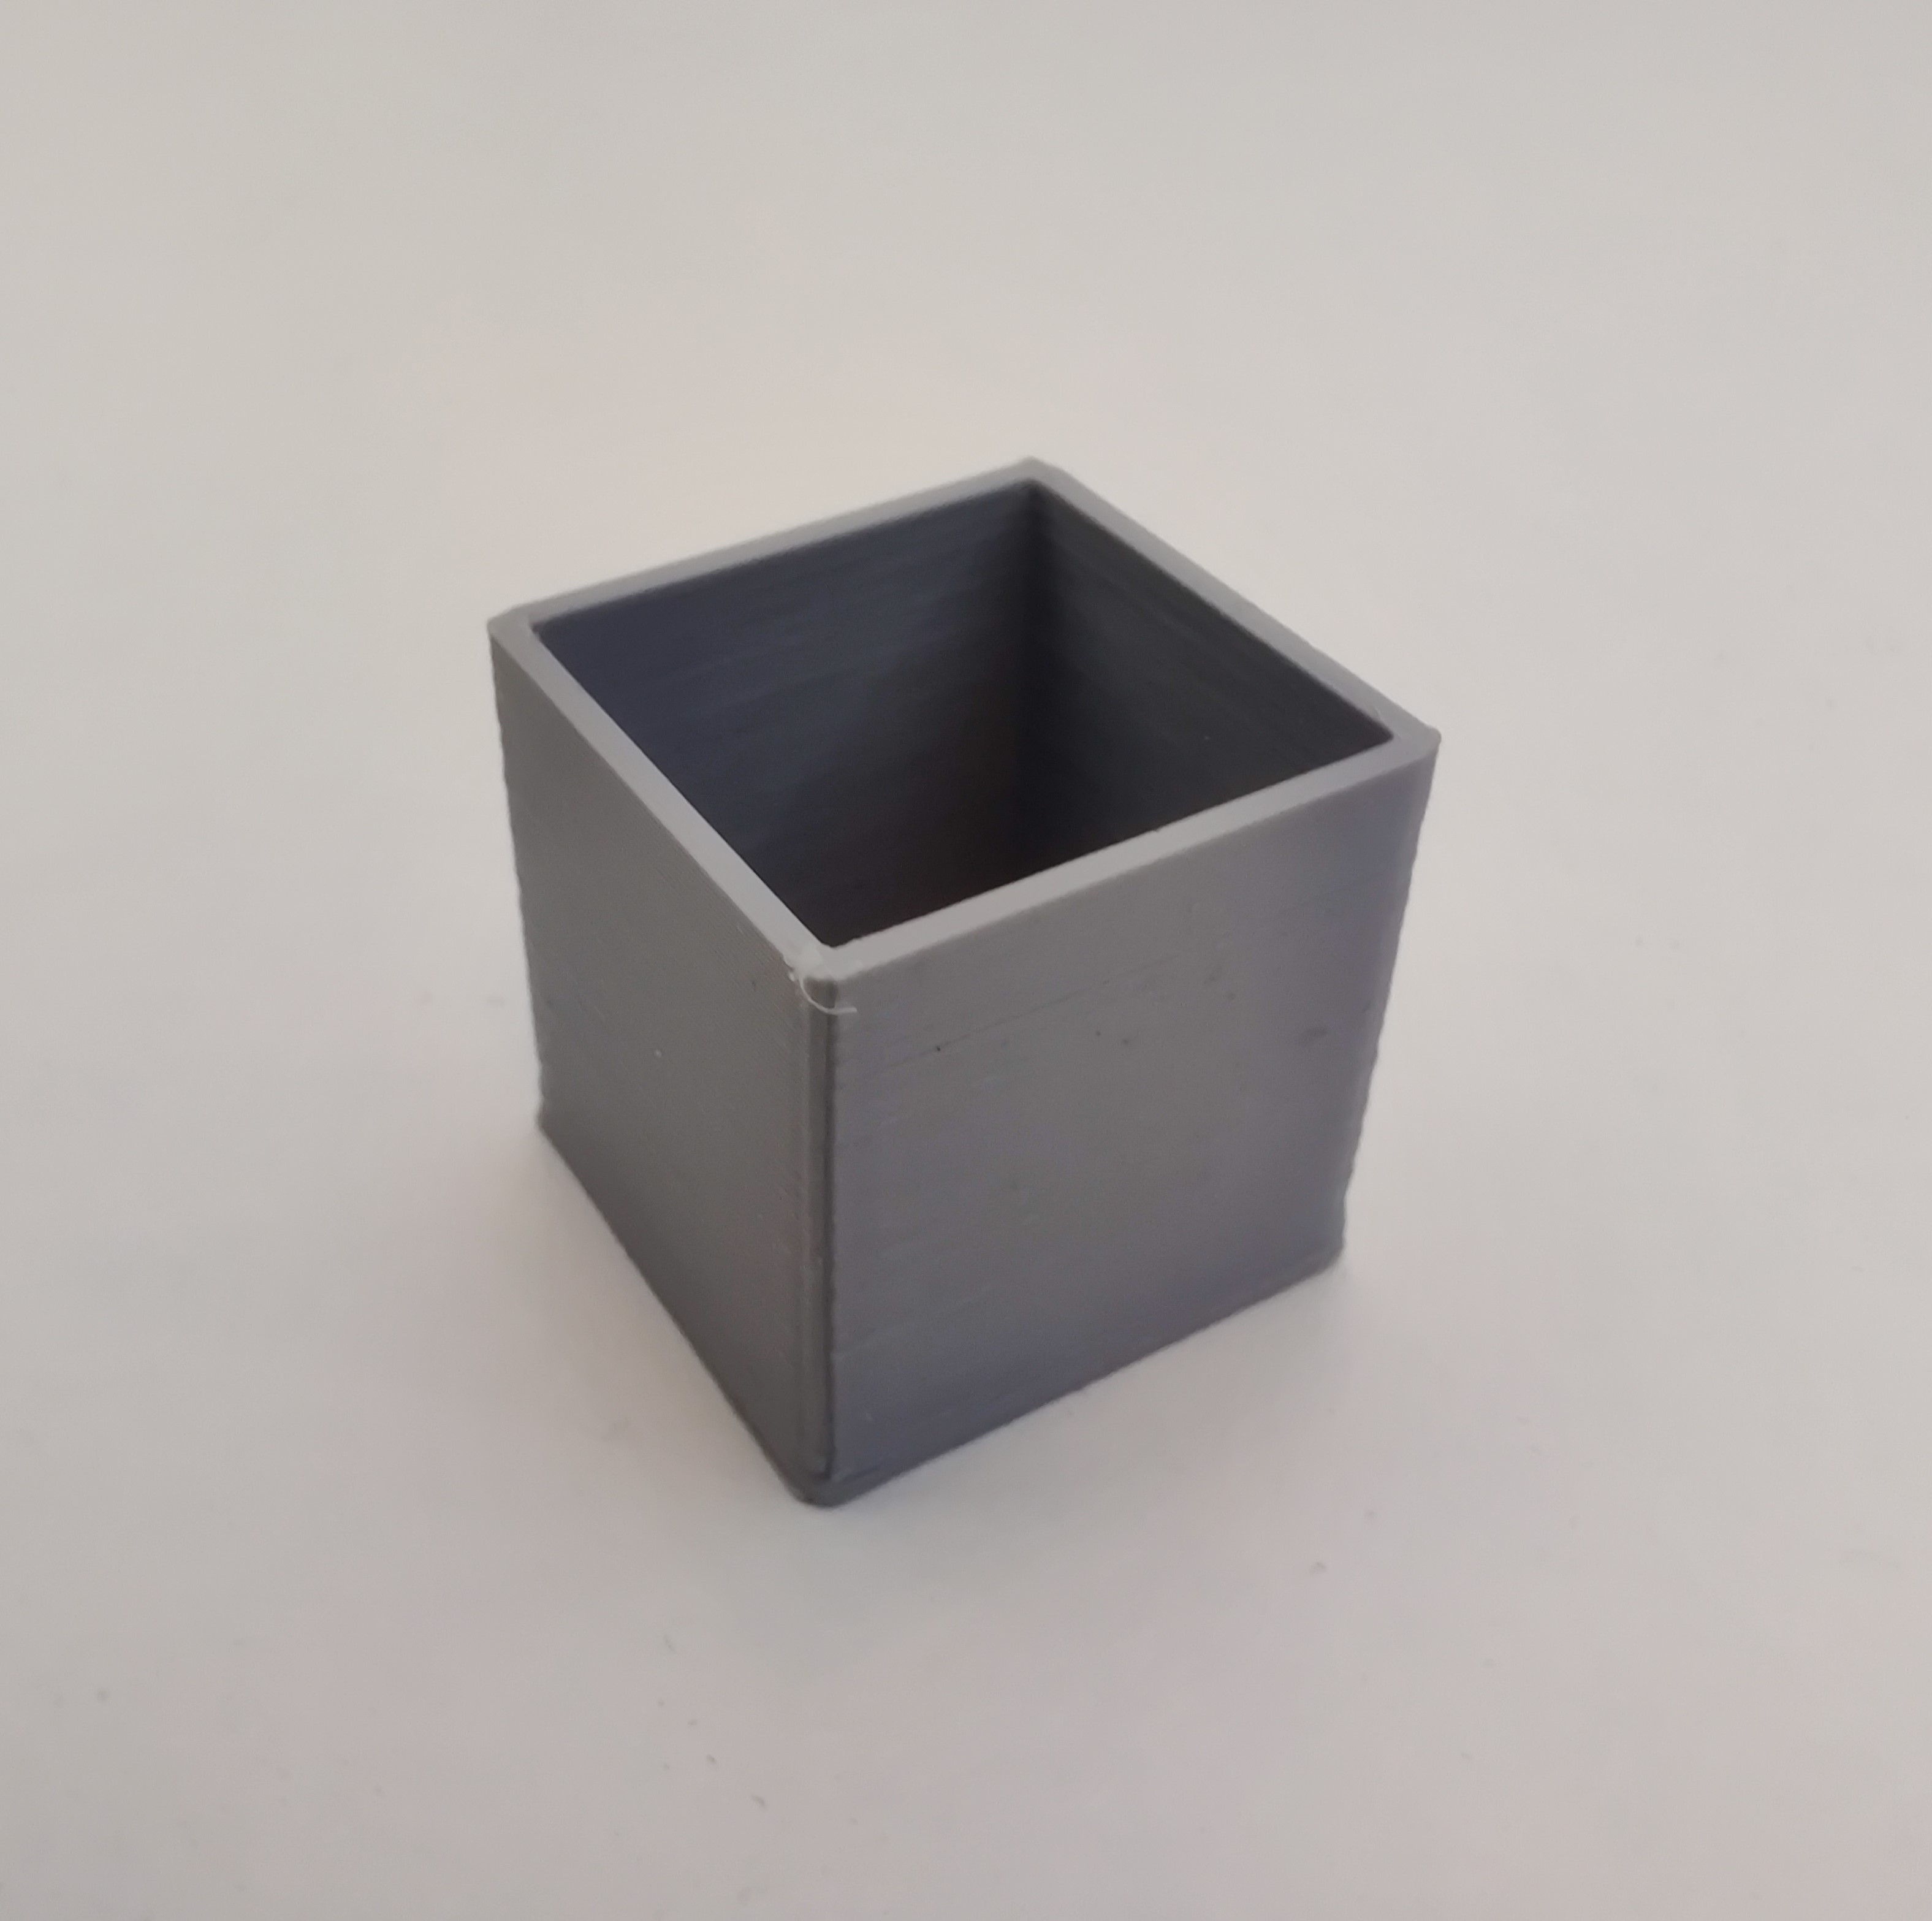 XYZ 20mm Wall Calibration Cube -> Less Filament